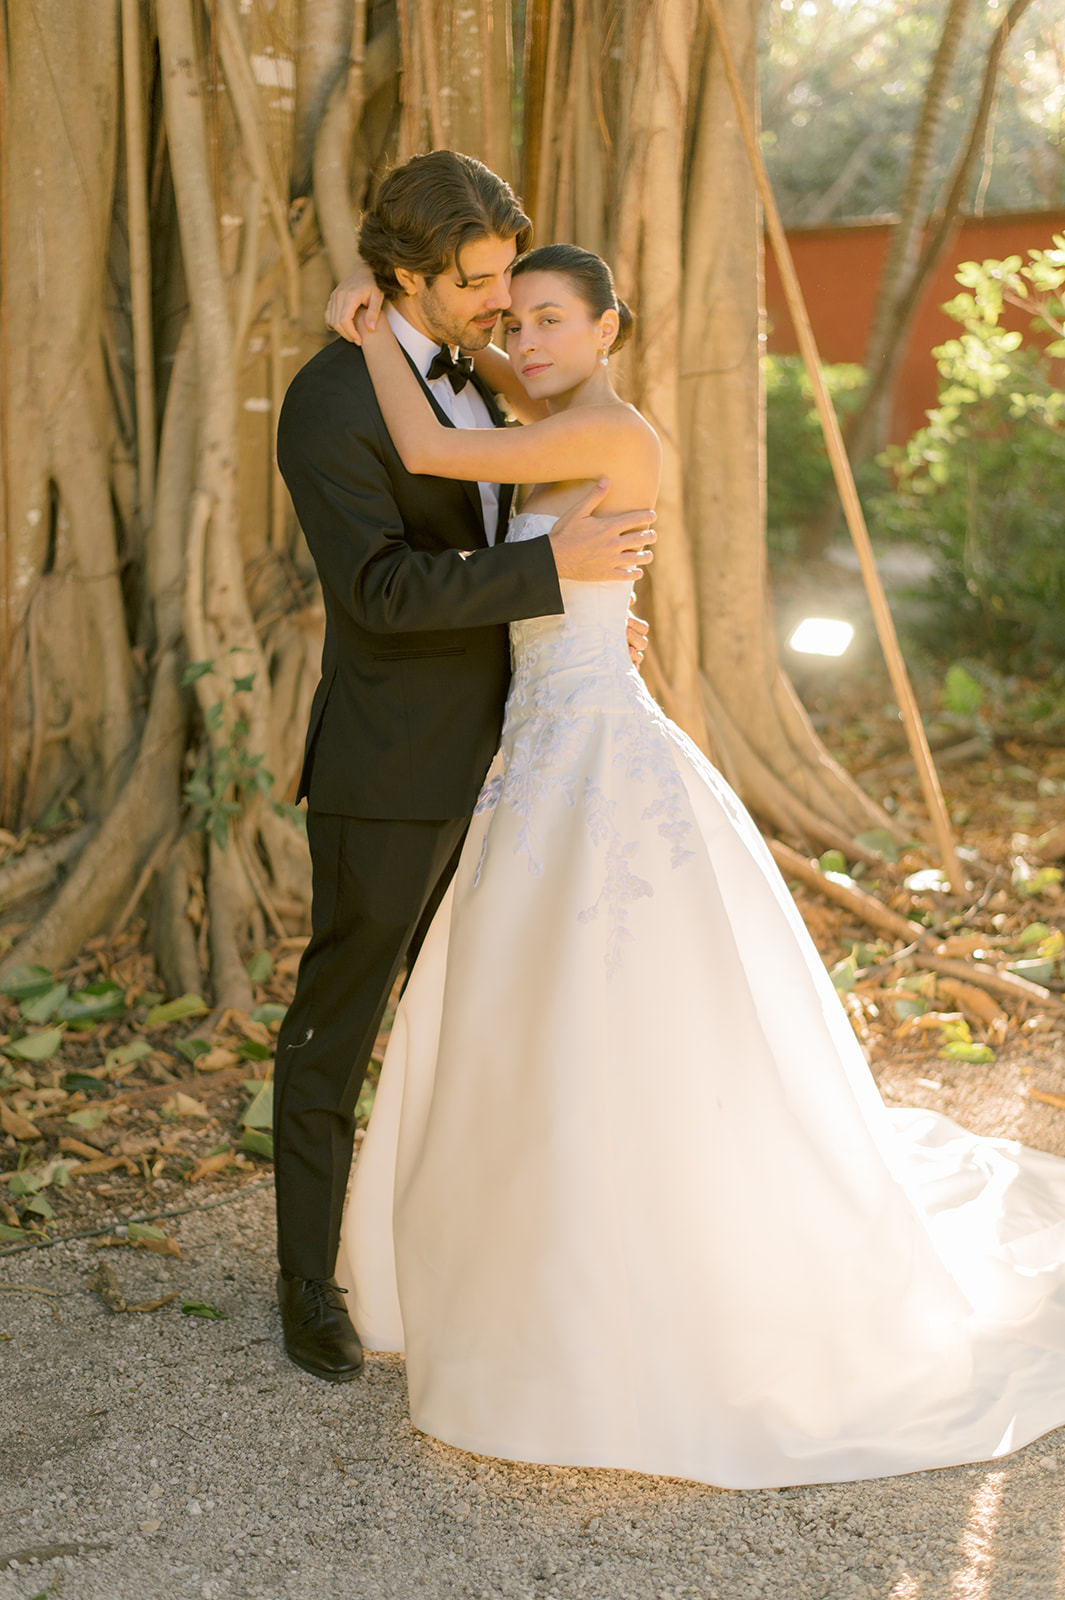 Miami Florida photographers who capture the joy of weddings
